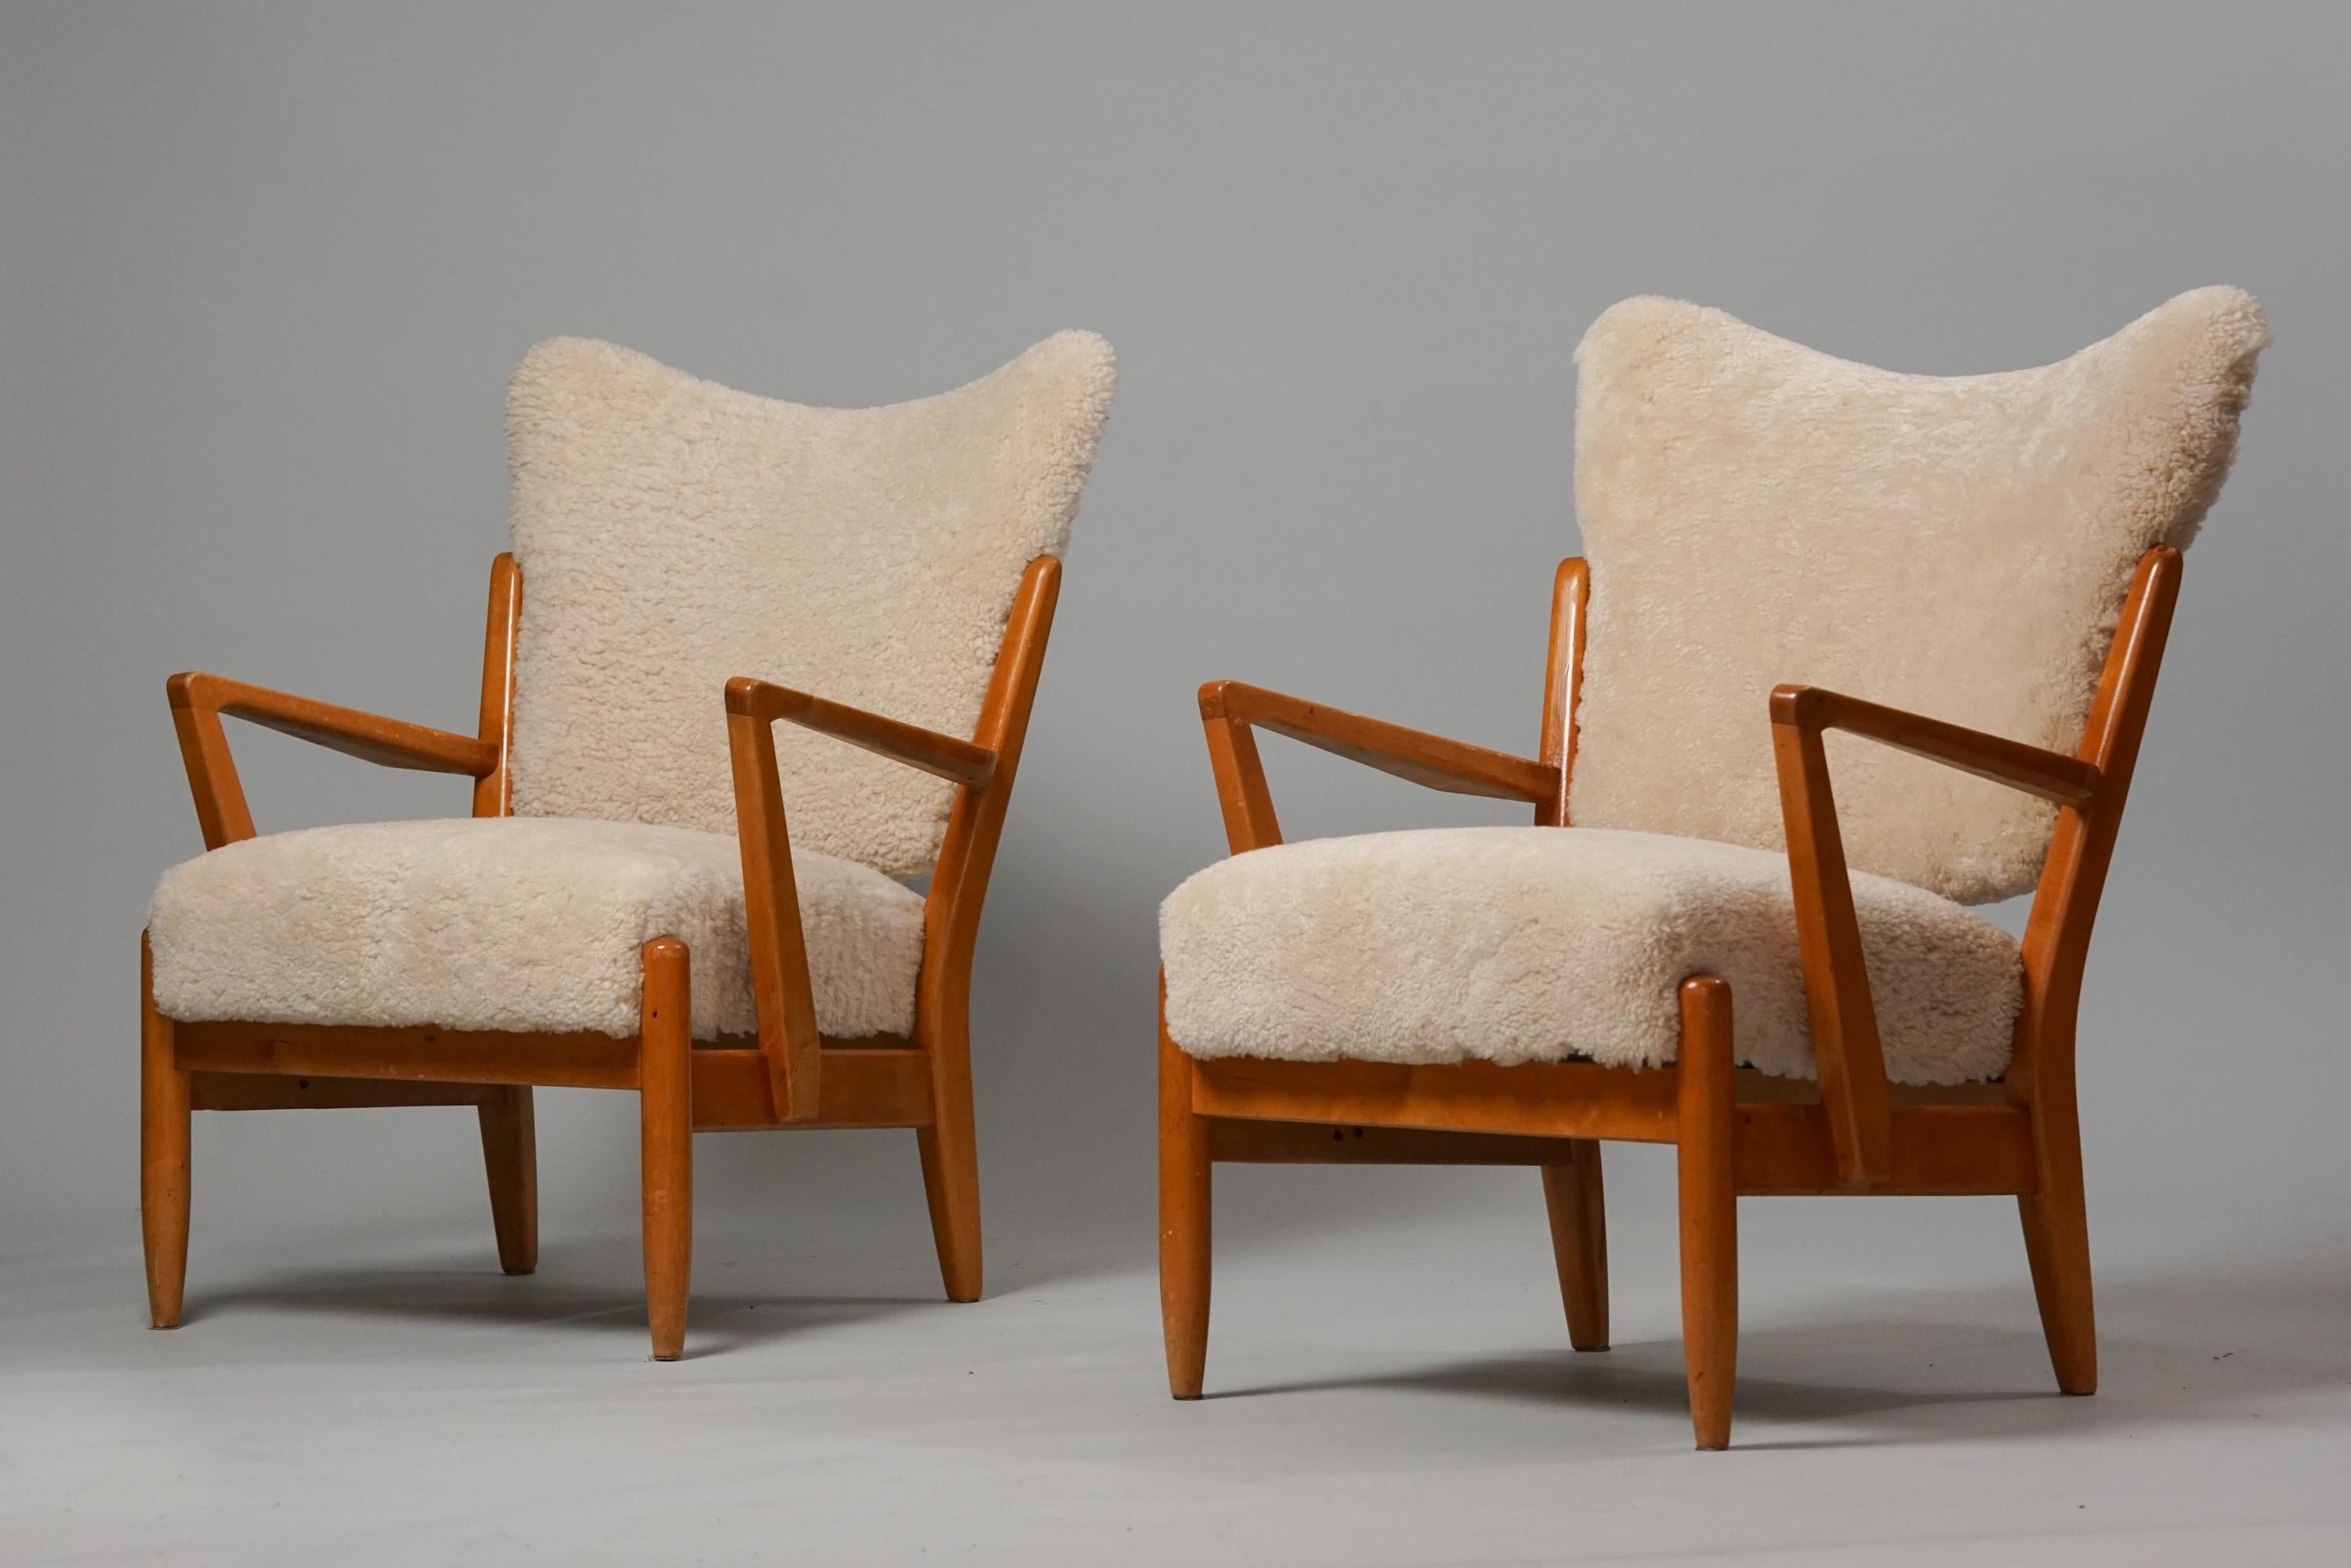 Skandinavische Moderne Sessel Modell 2411 aus Schafsleder, Asko, 1950er Jahre  (Finnisch) im Angebot